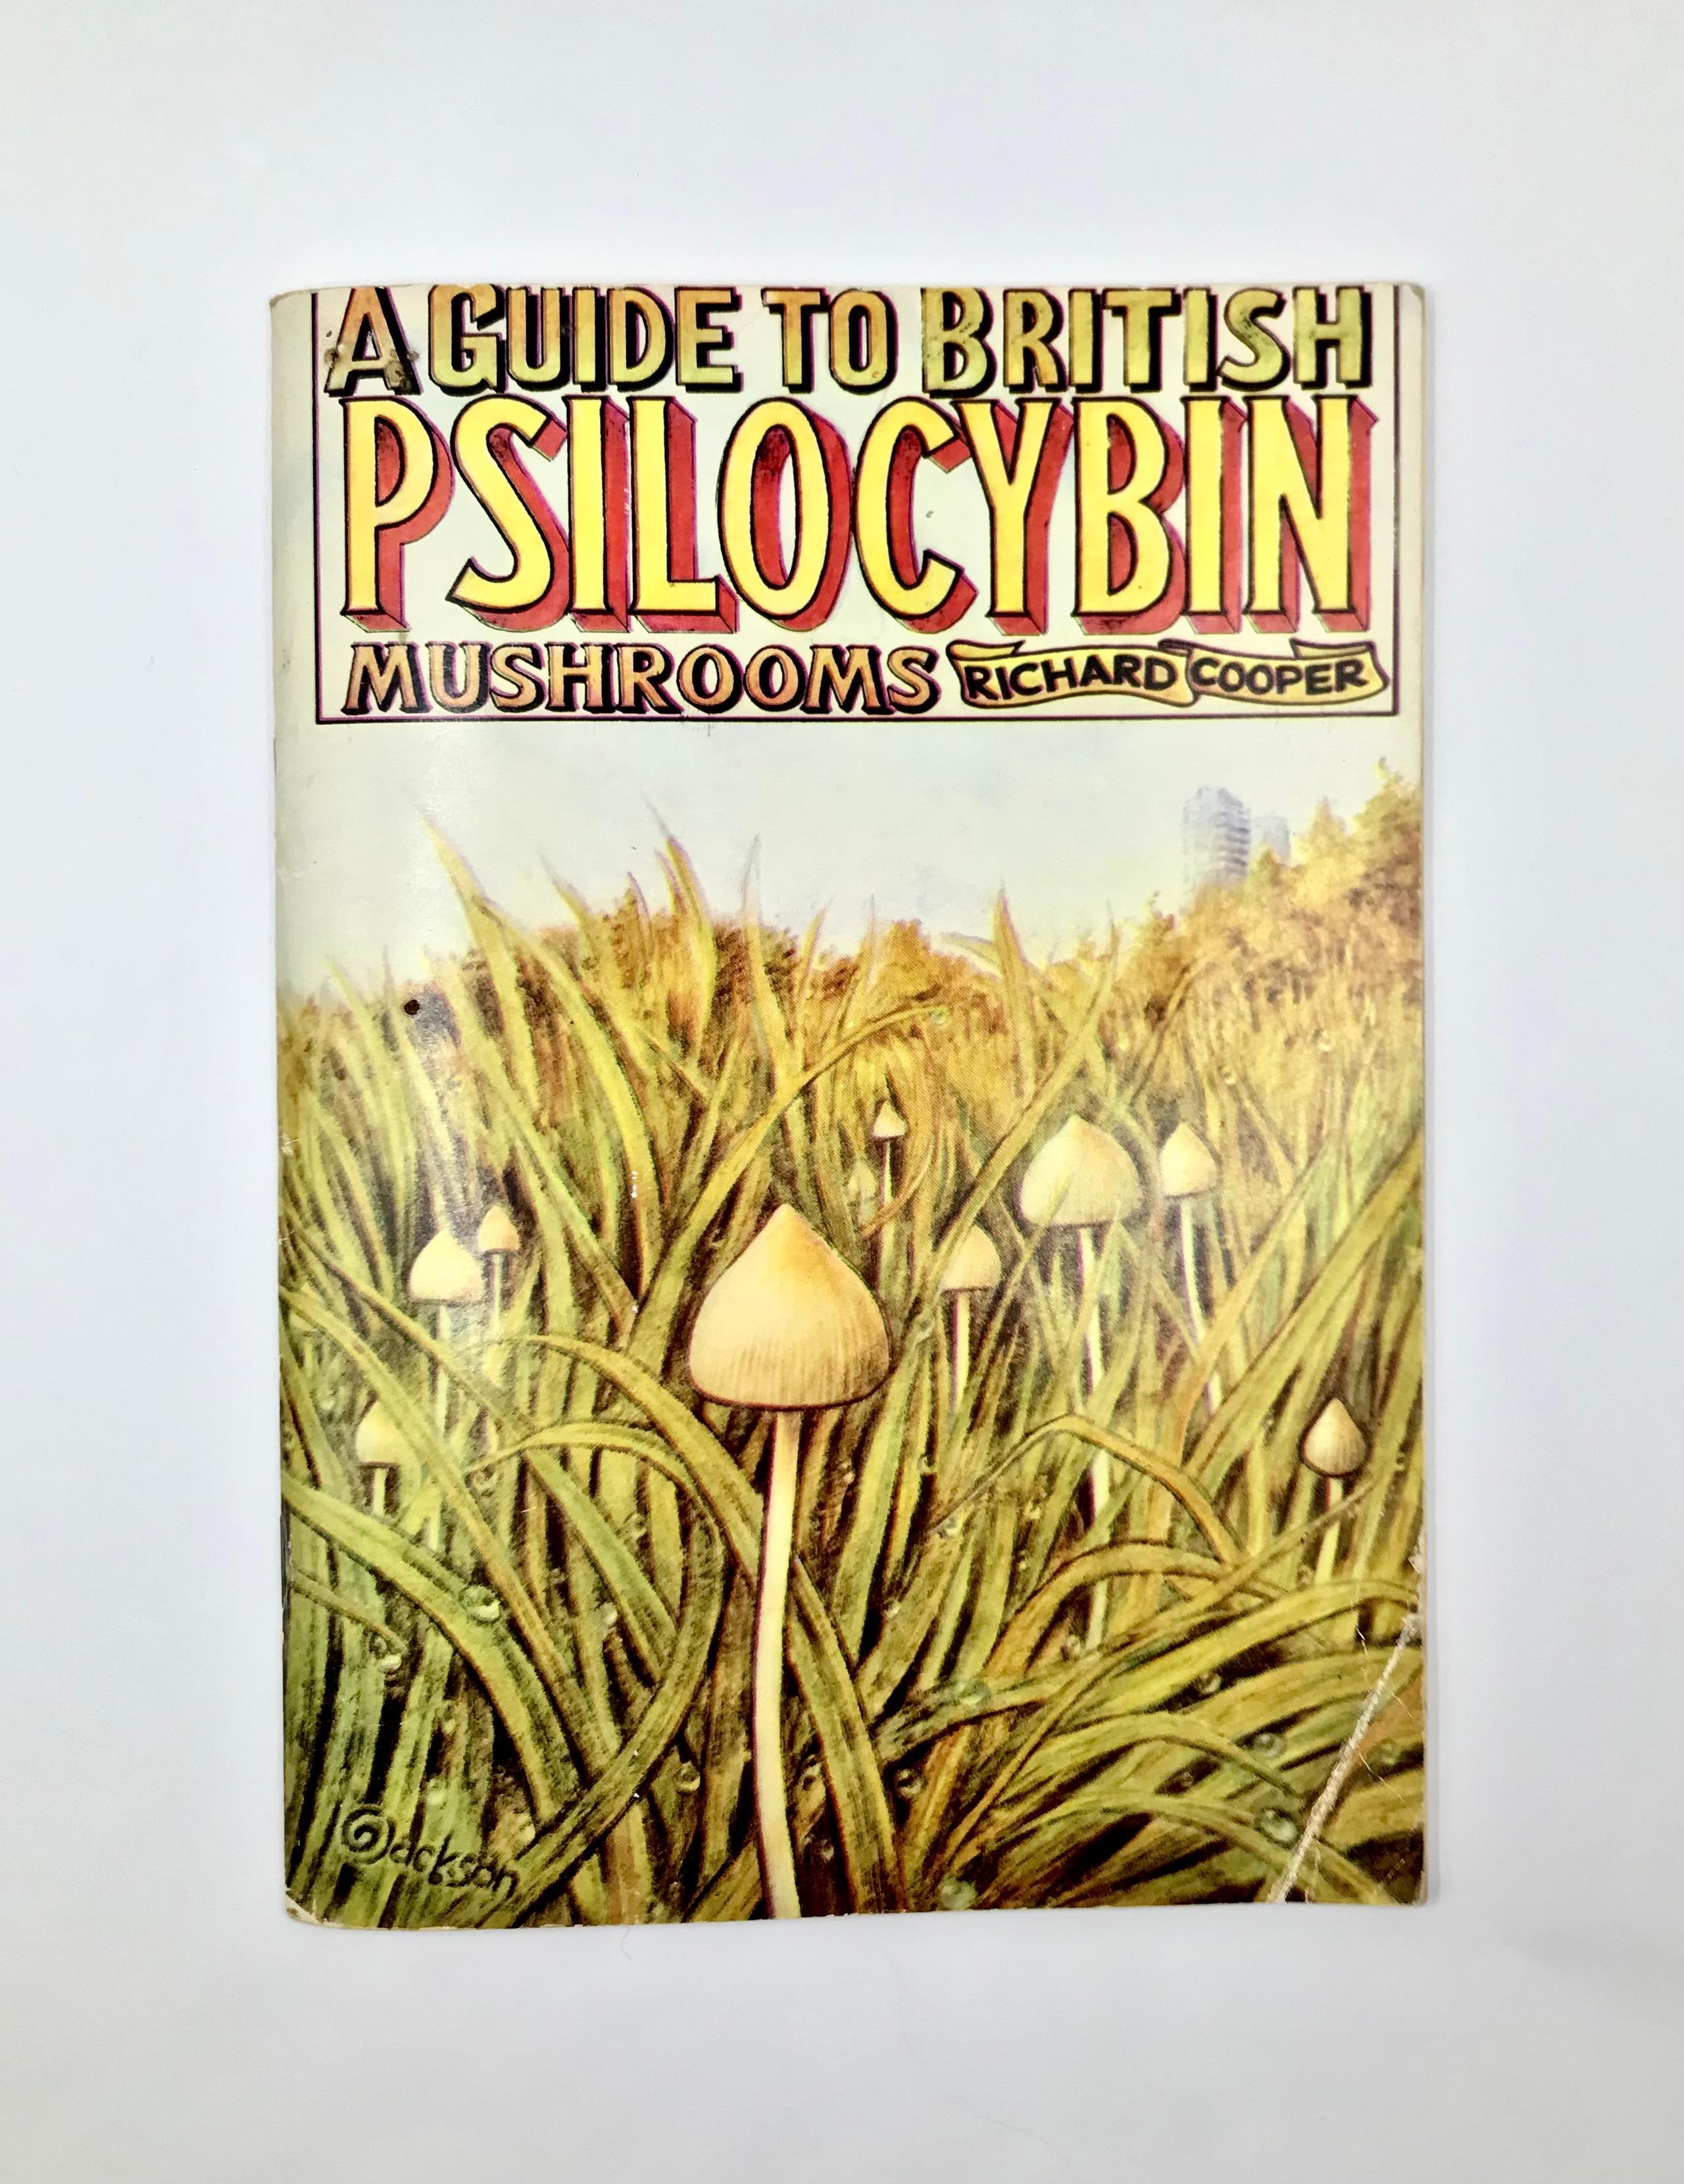 A Guide to British Psilocybin Mushrooms by Richard Cooper